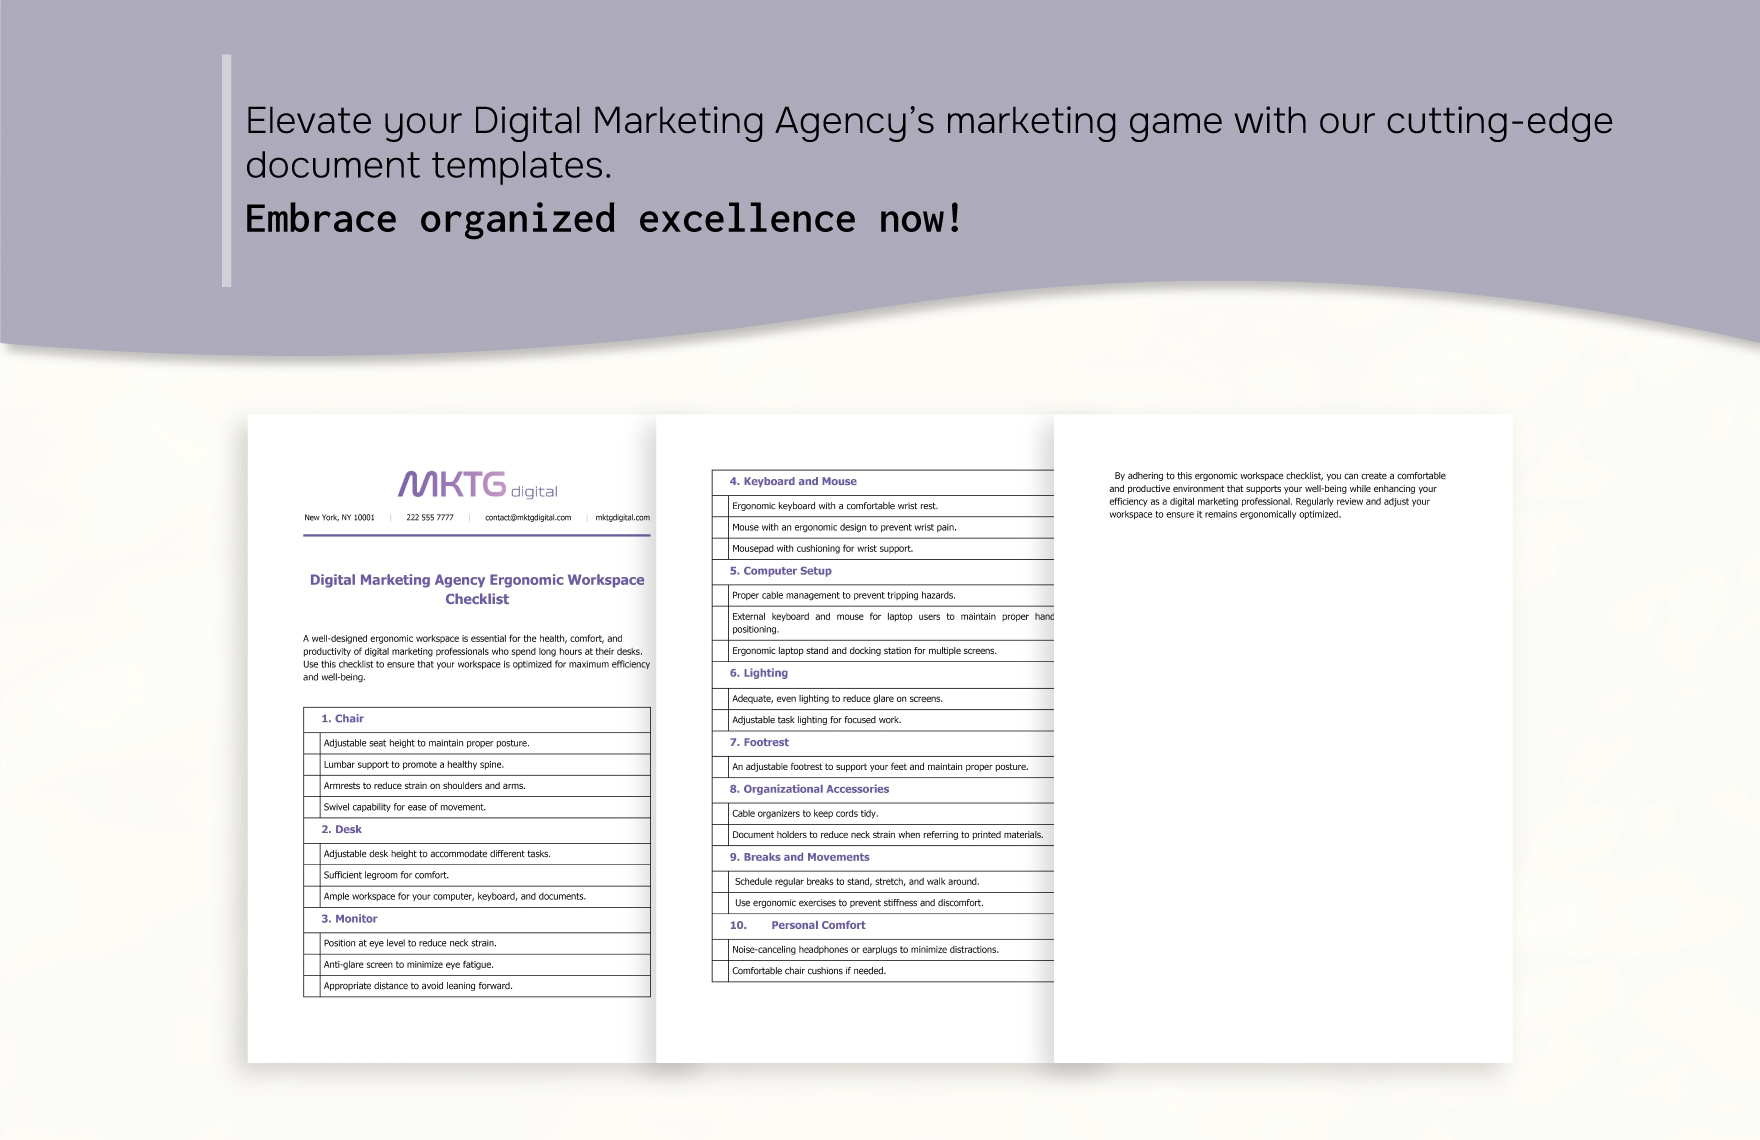 Digital Marketing Agency Ergonomic Workspace Checklist Template